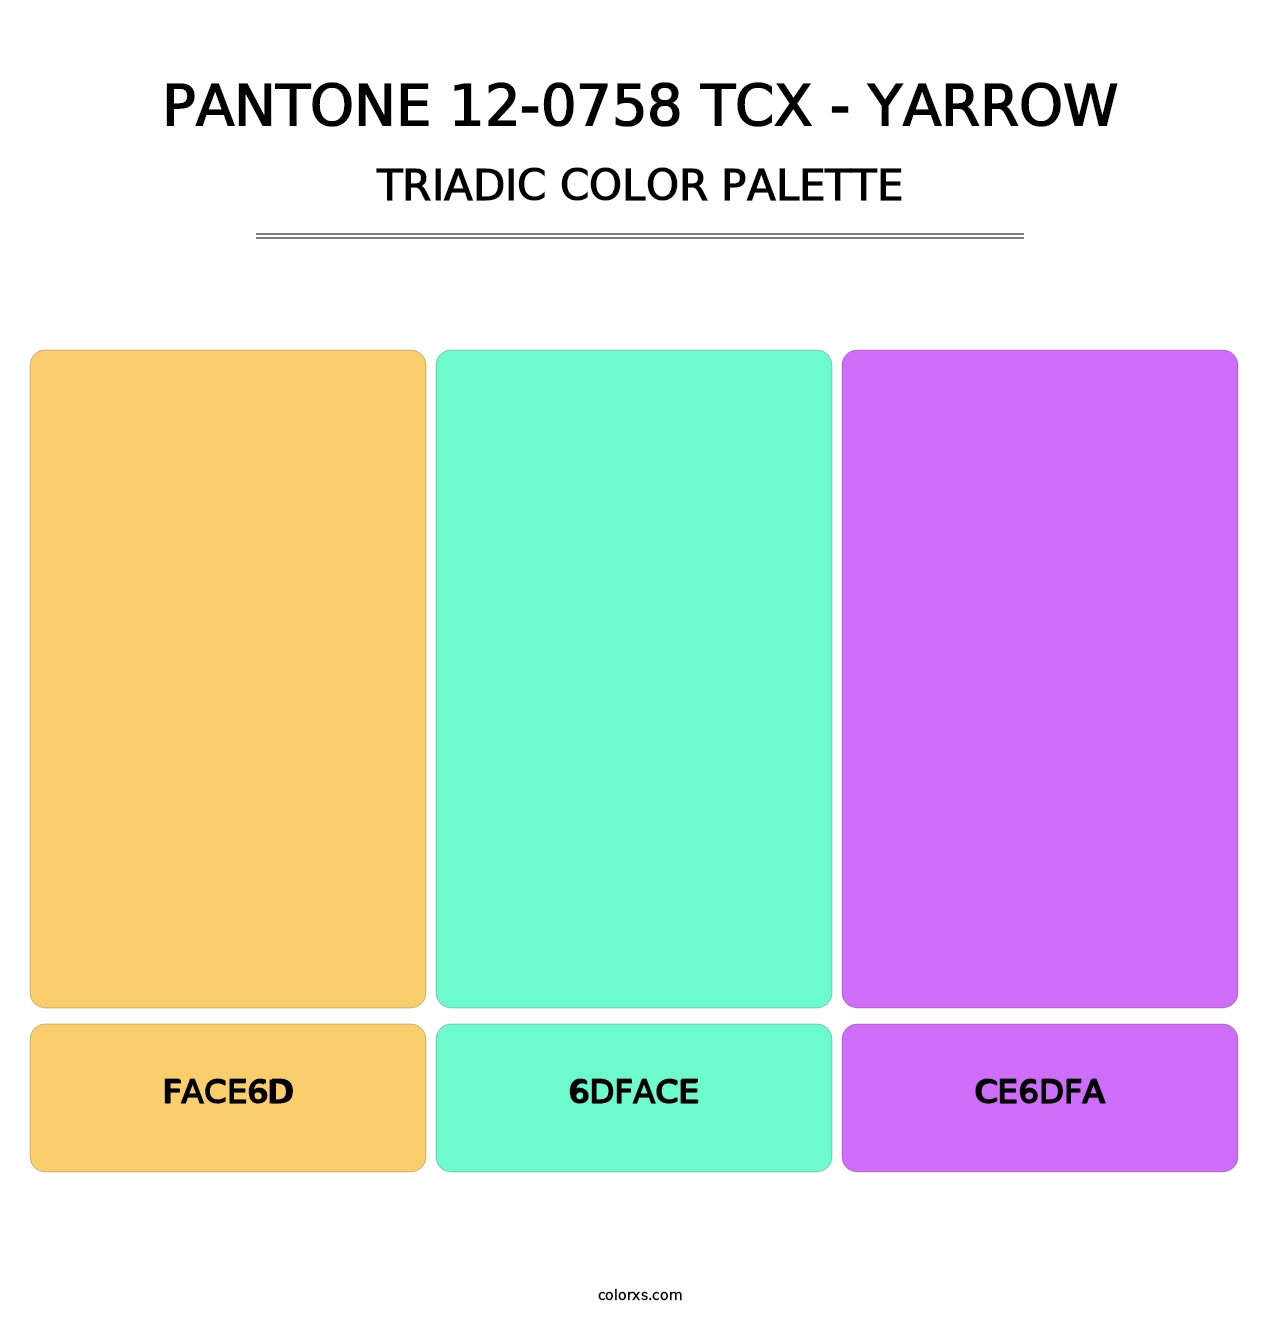 PANTONE 12-0758 TCX - Yarrow - Triadic Color Palette